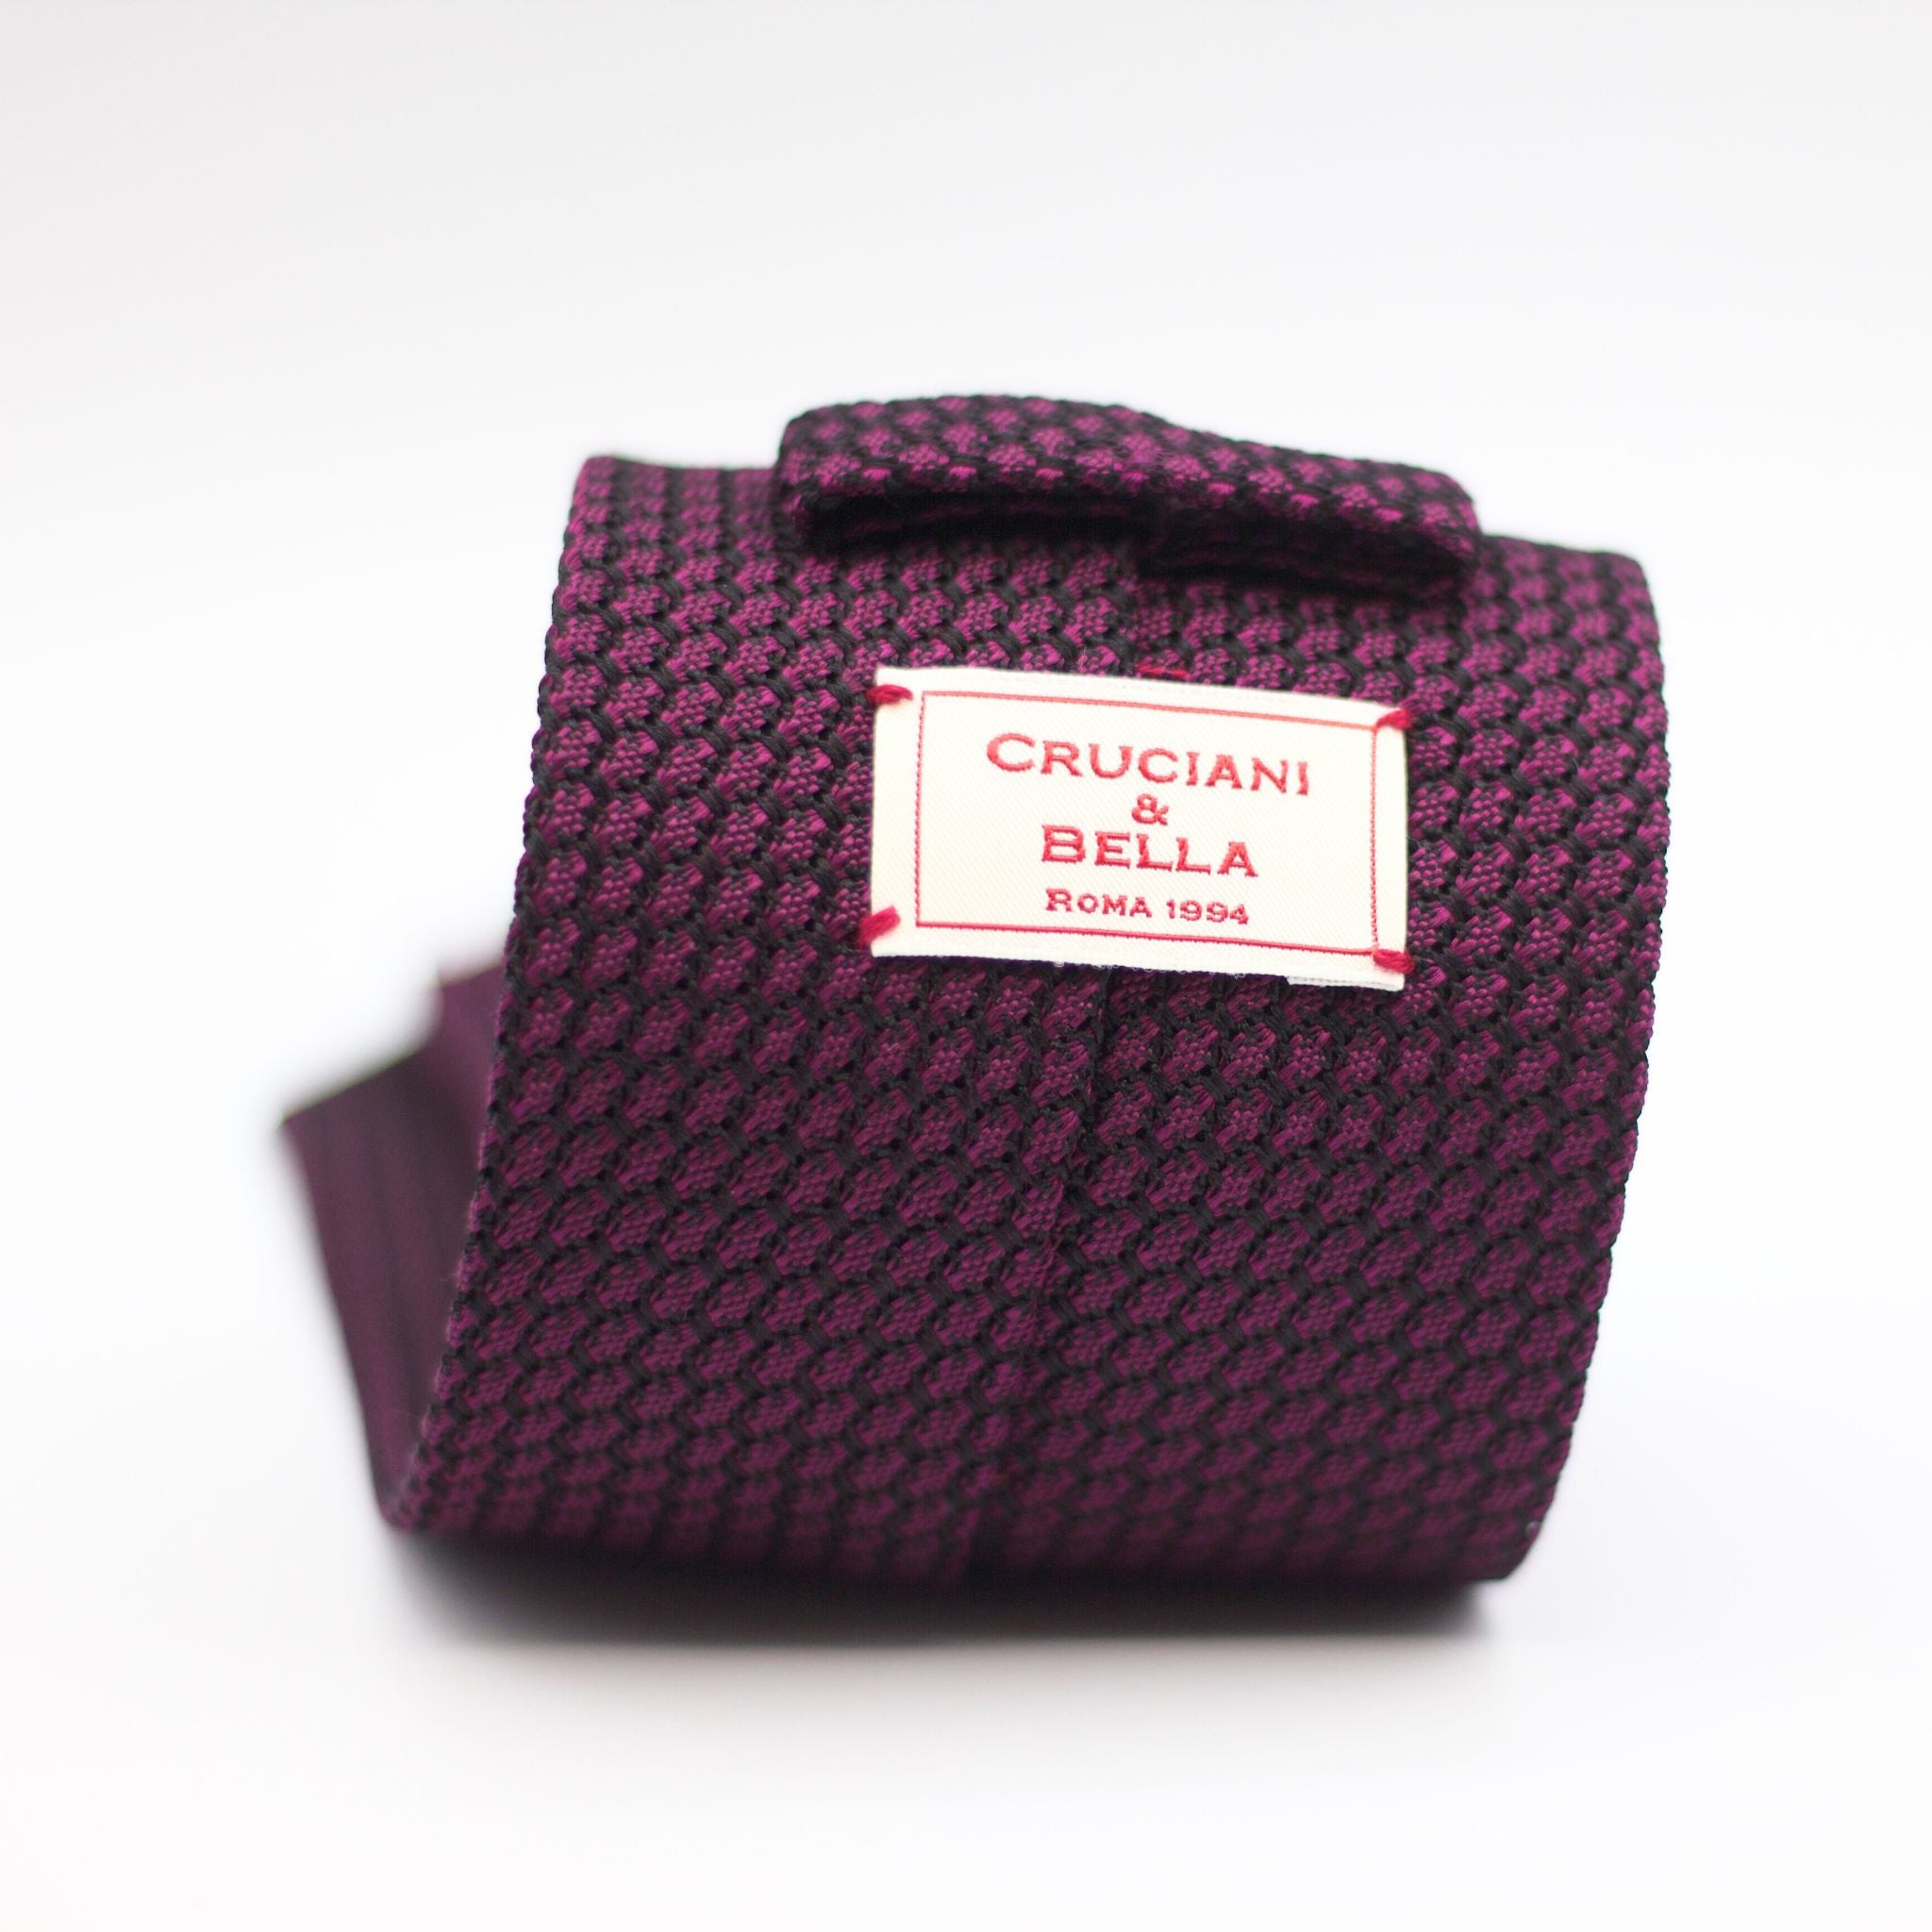 Cruciani & Bella 100% Silk Grenadine Garza Grossa Woven in Italy Unlined Hand rolled blades Purple and black tie Handmade in Italy 8 cm x 150 cm